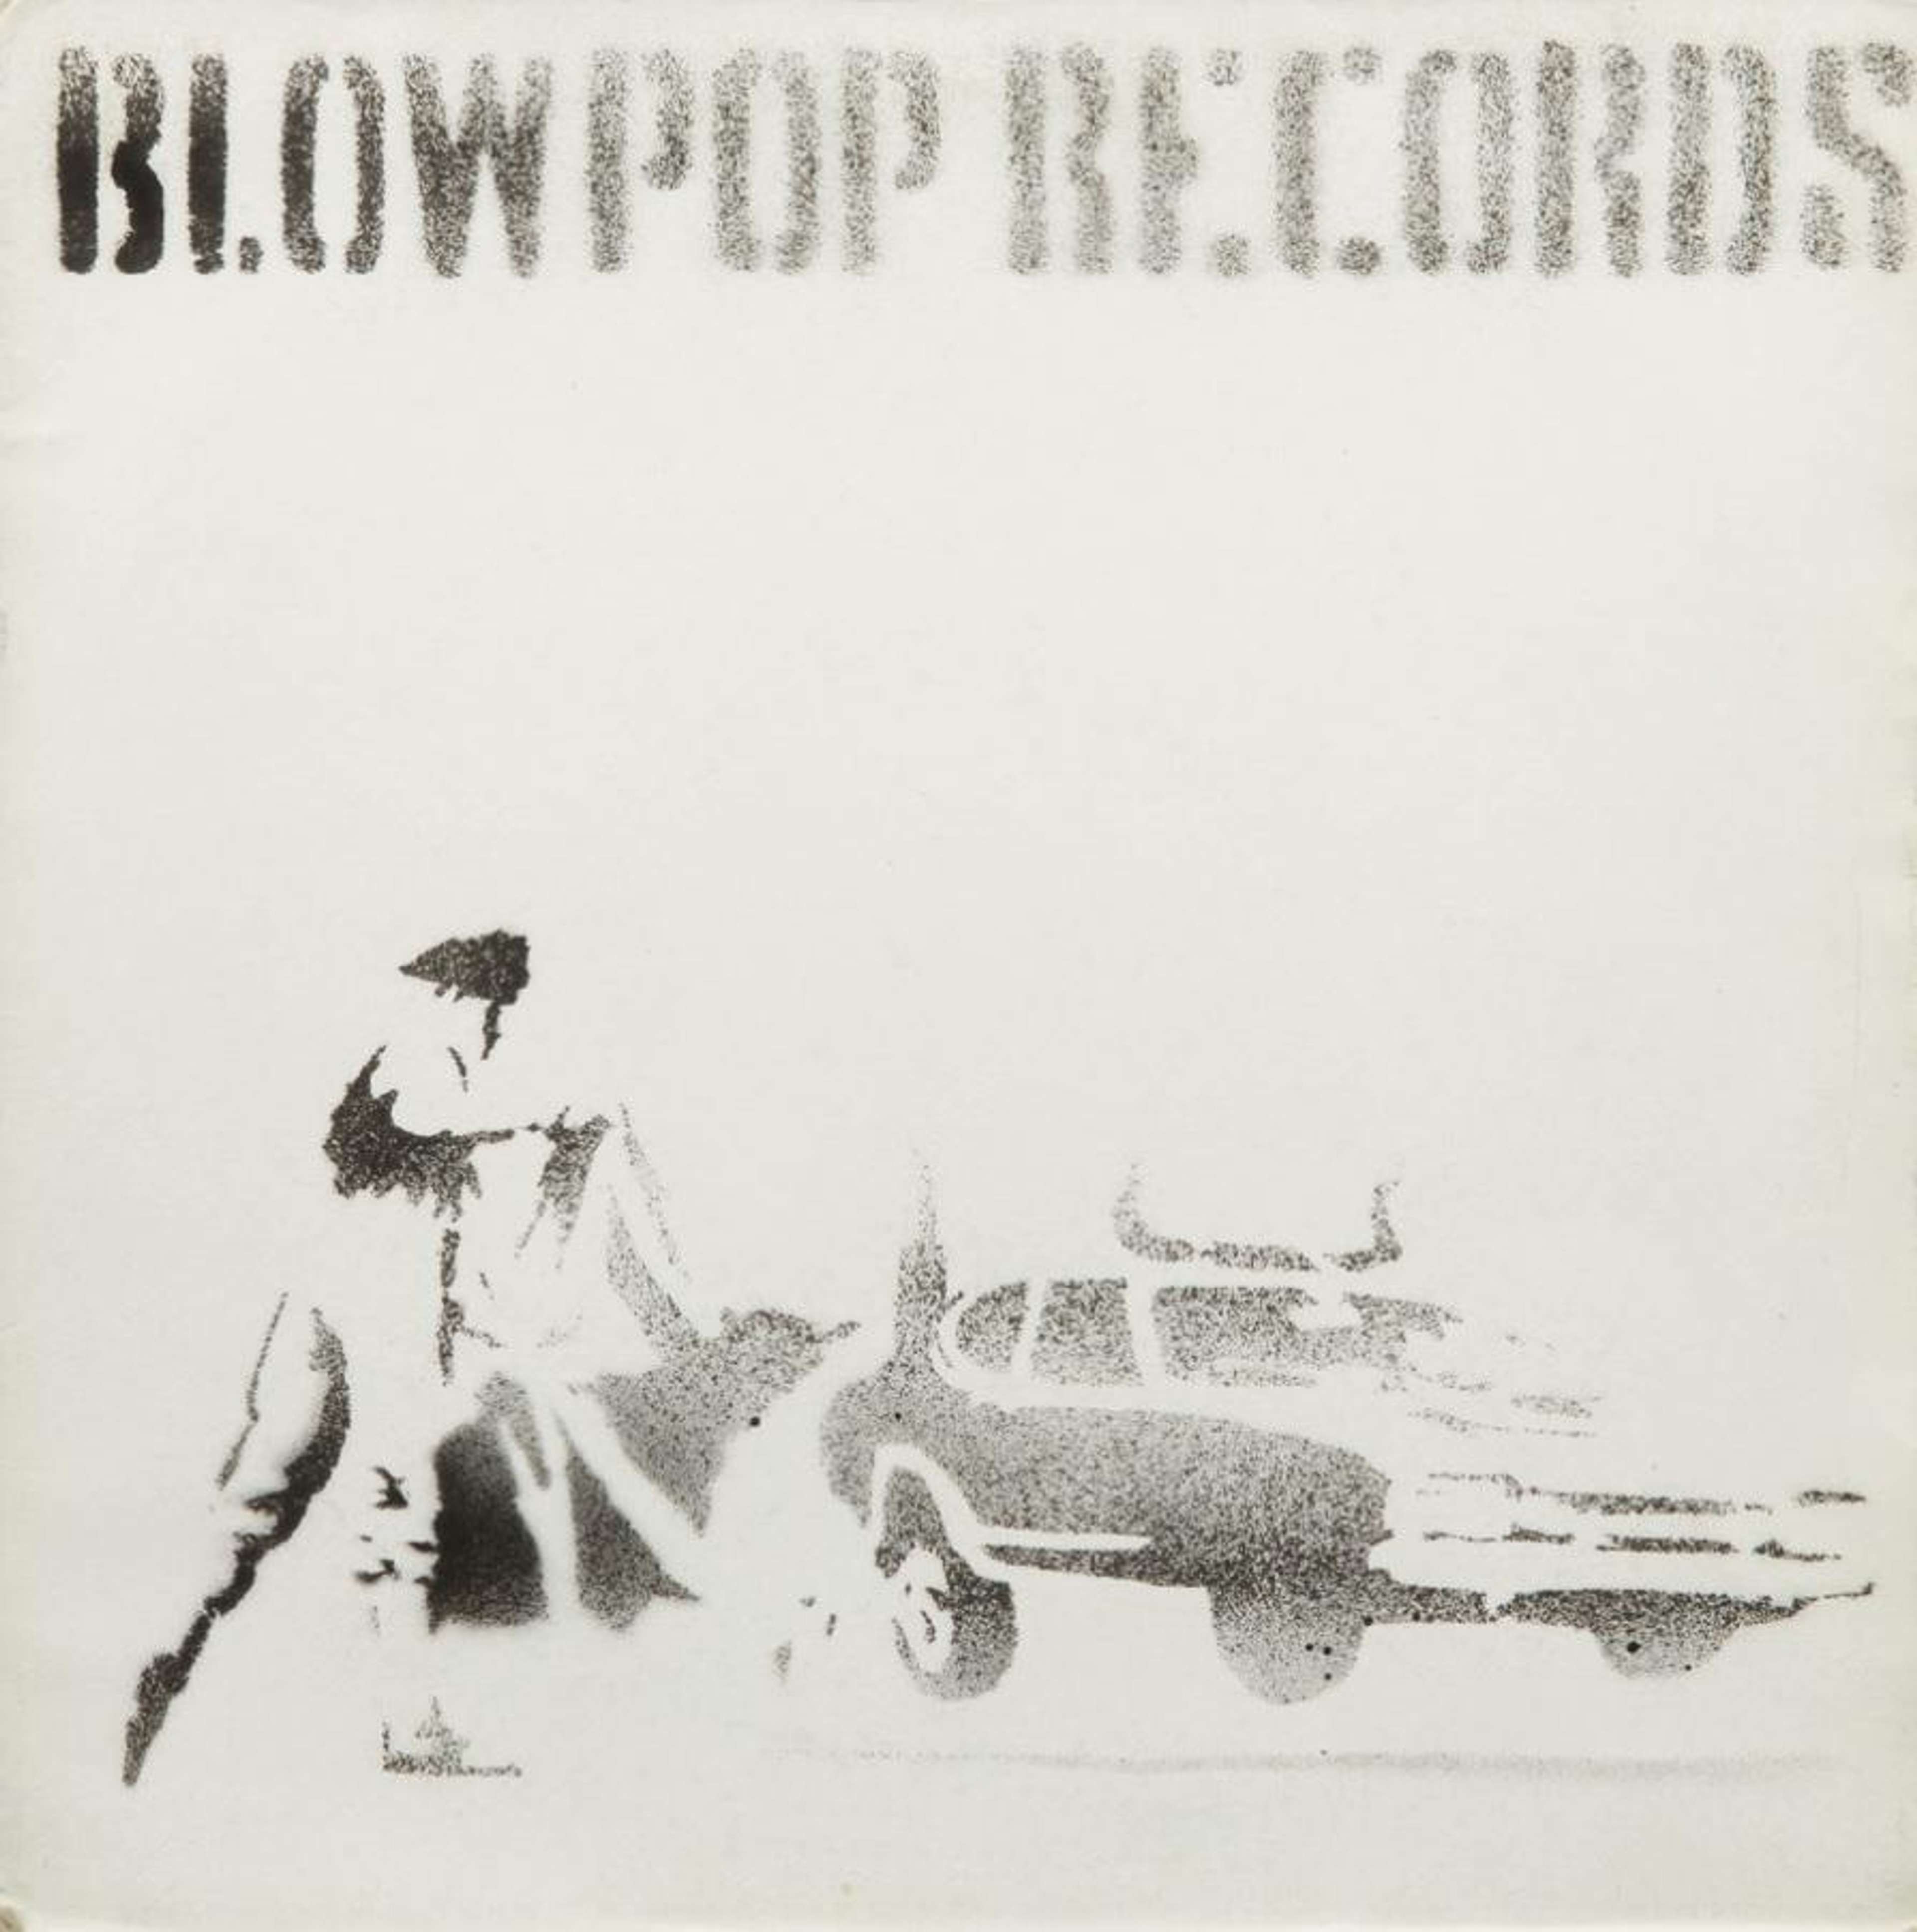 Blowpop Records